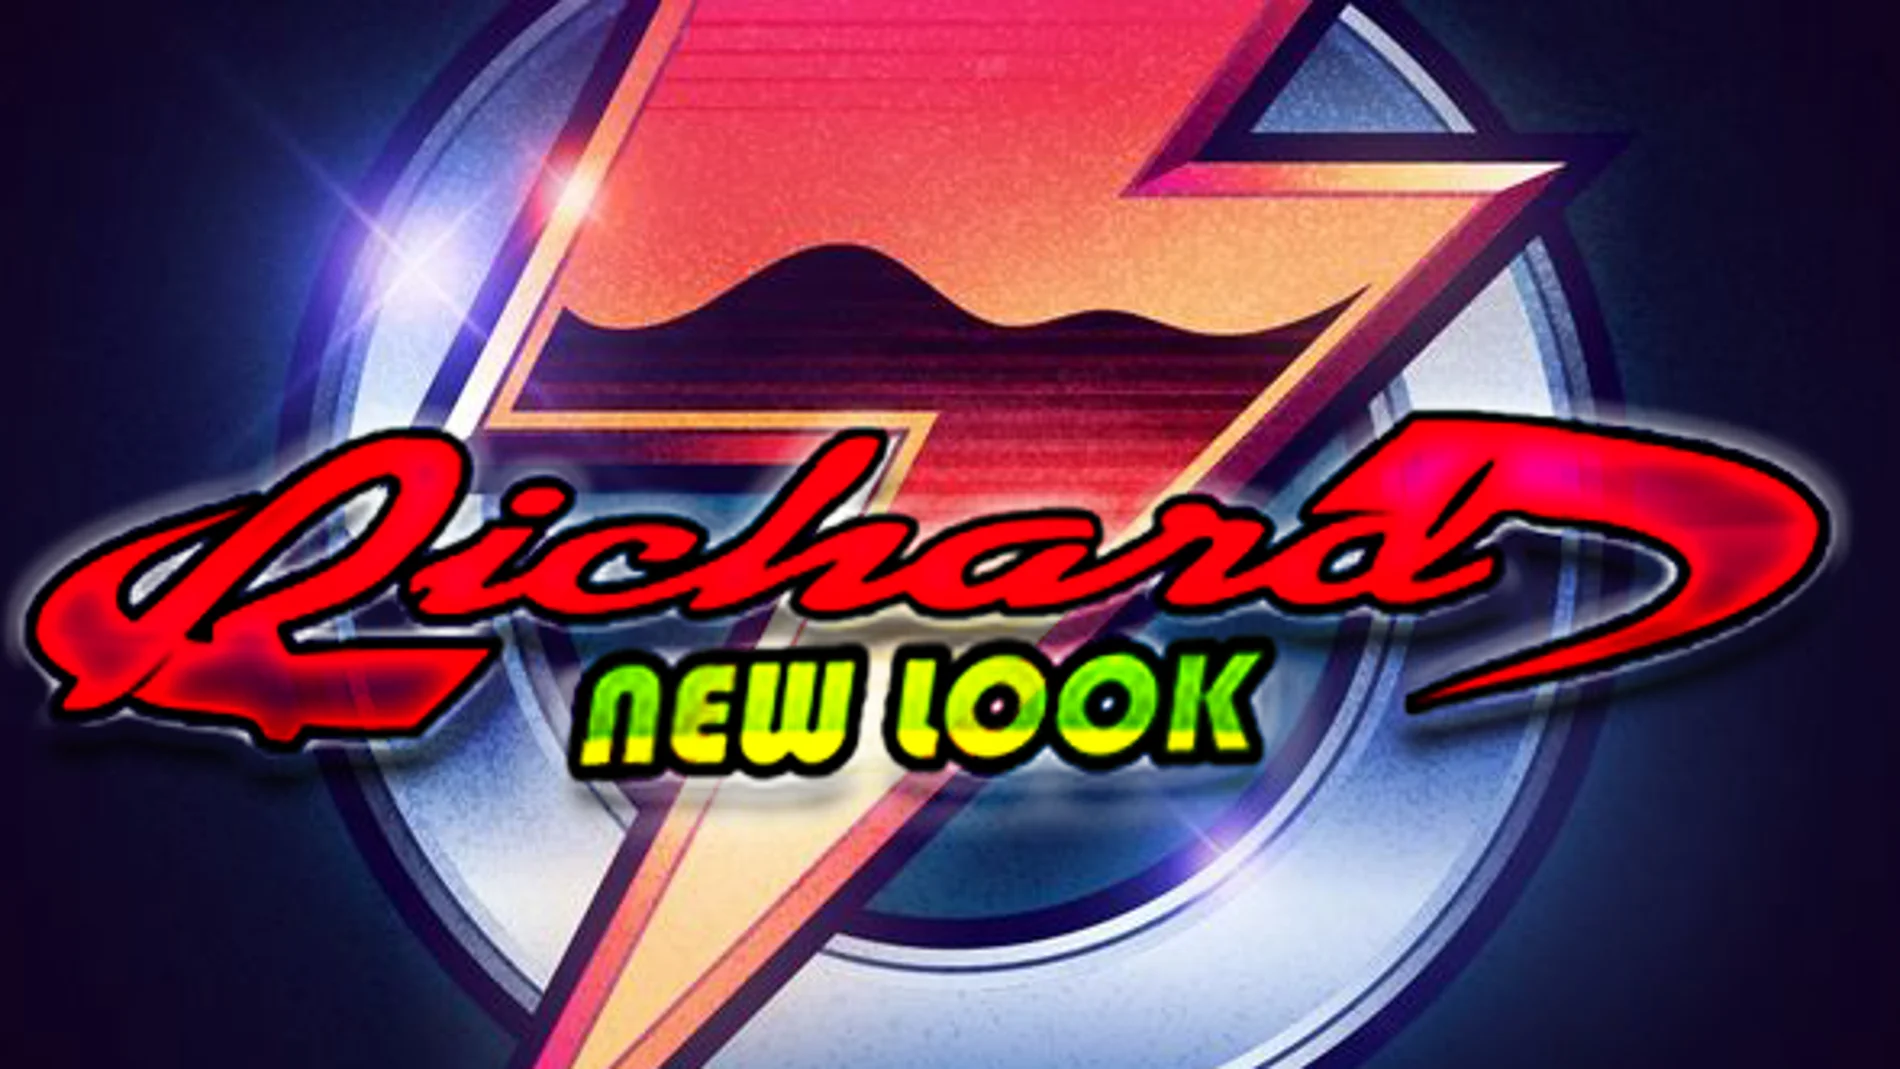 Logo de la sala Richard New Look